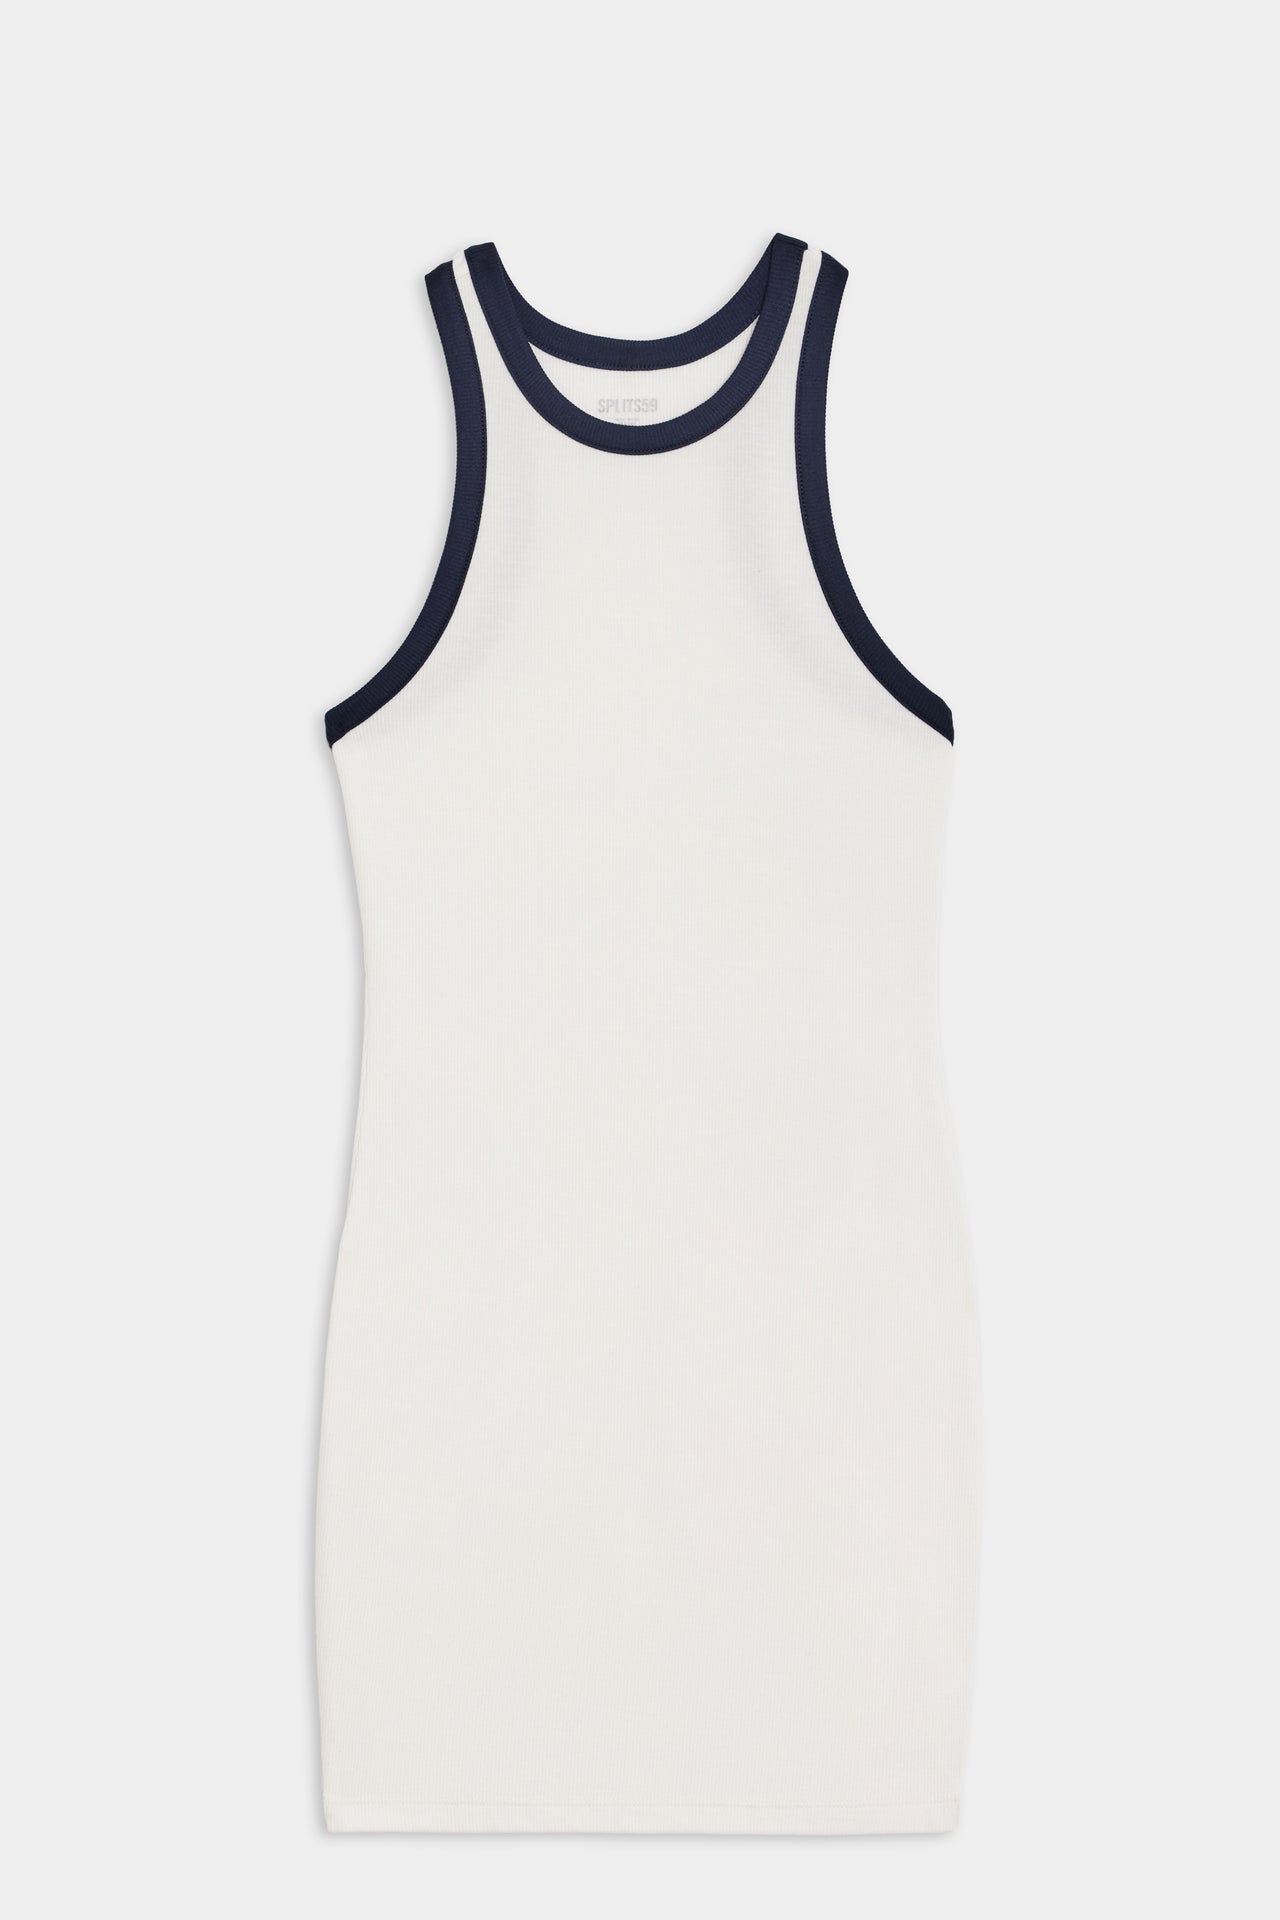 A Kiki Rib Dress - White/Indigo with navy trim, perfect for summer layering by SPLITS59.